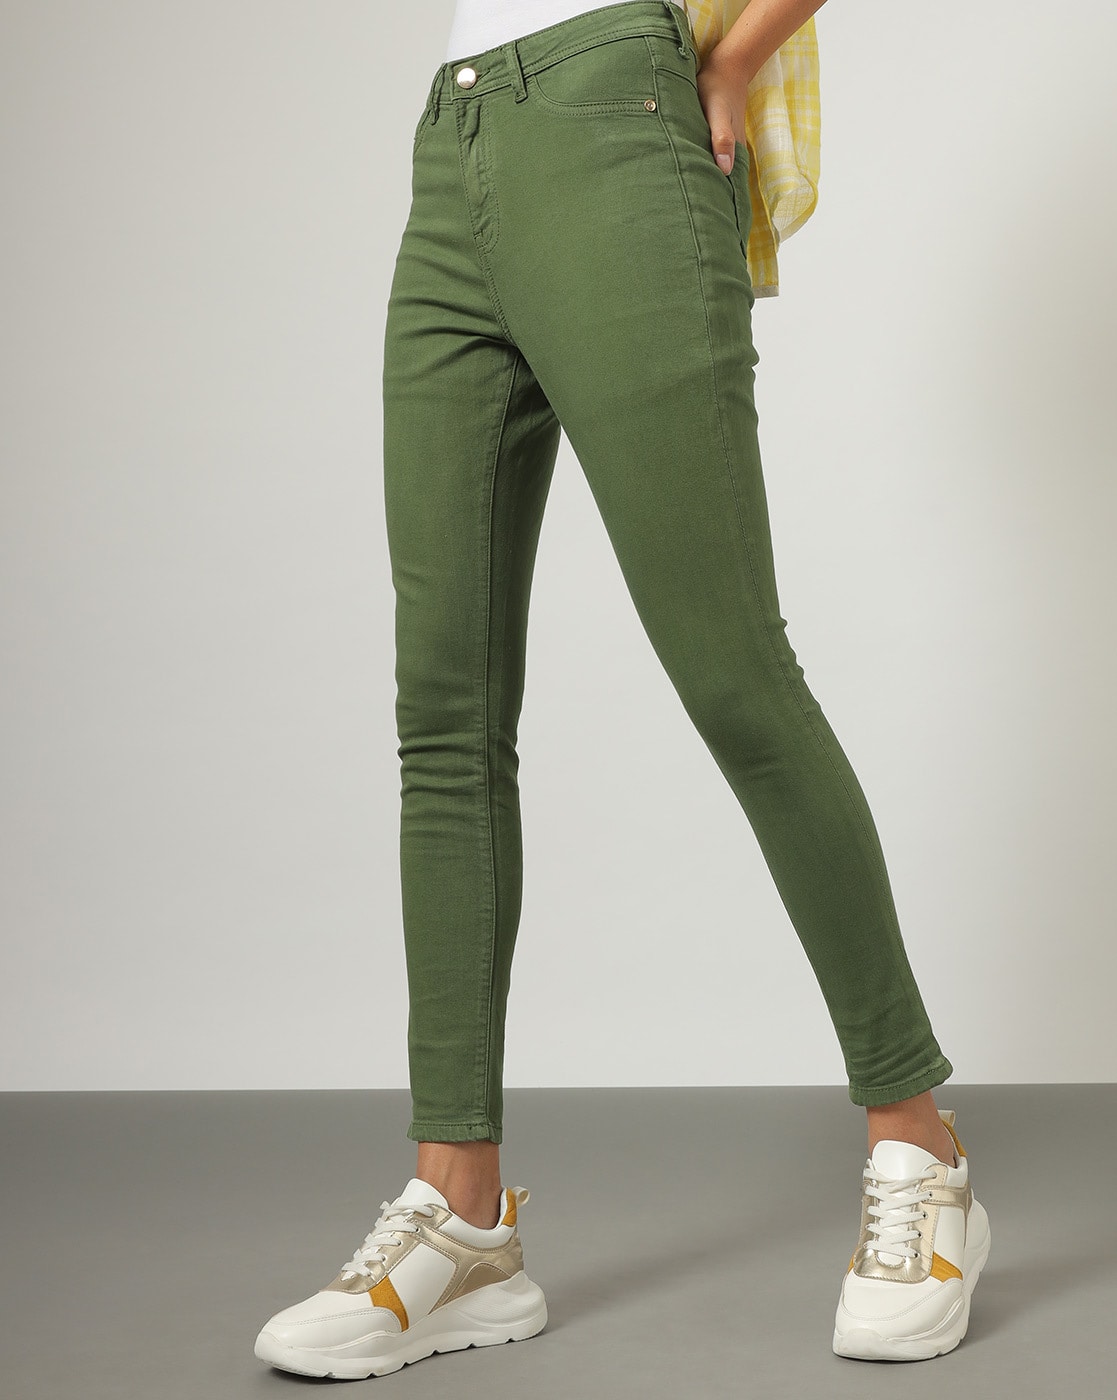 Jeans & Trousers | Green Cargo Girls Jeans XXL | Freeup